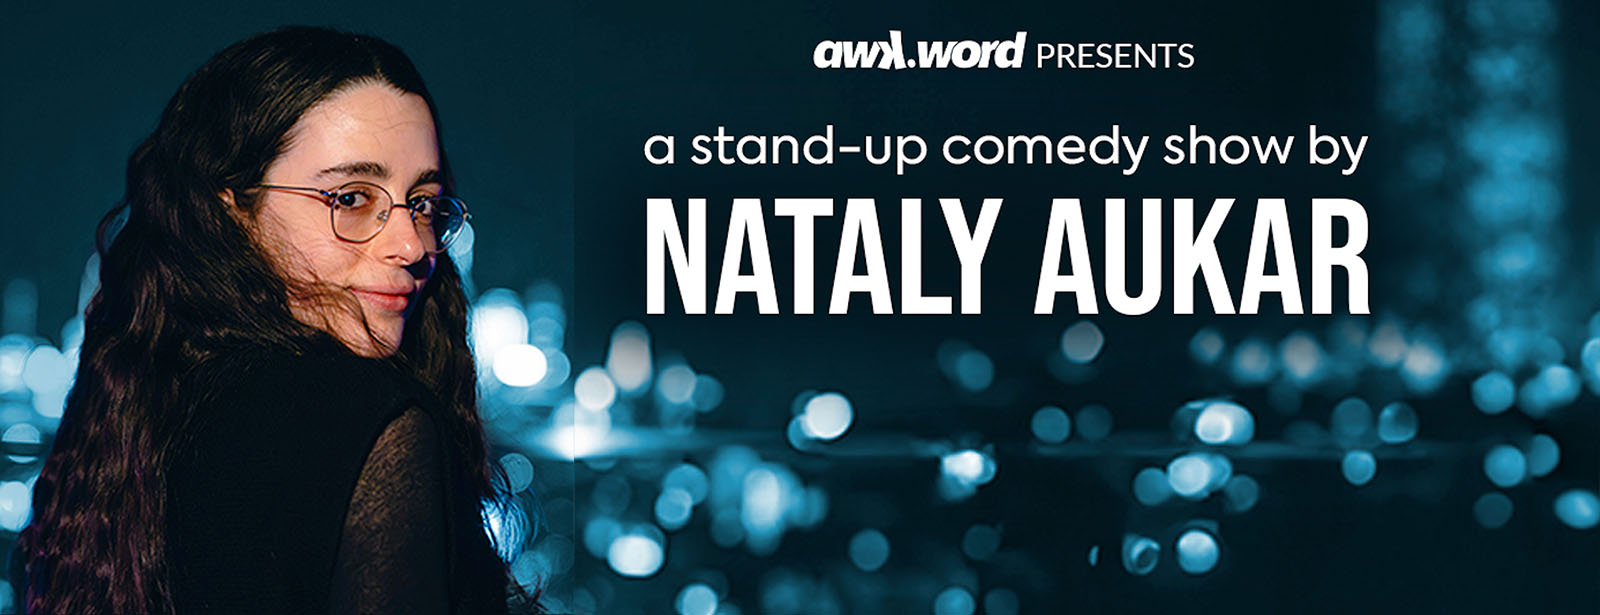 Nataly Aukar Live at Zabeel Theatre, Dubai || Wow-Emirates